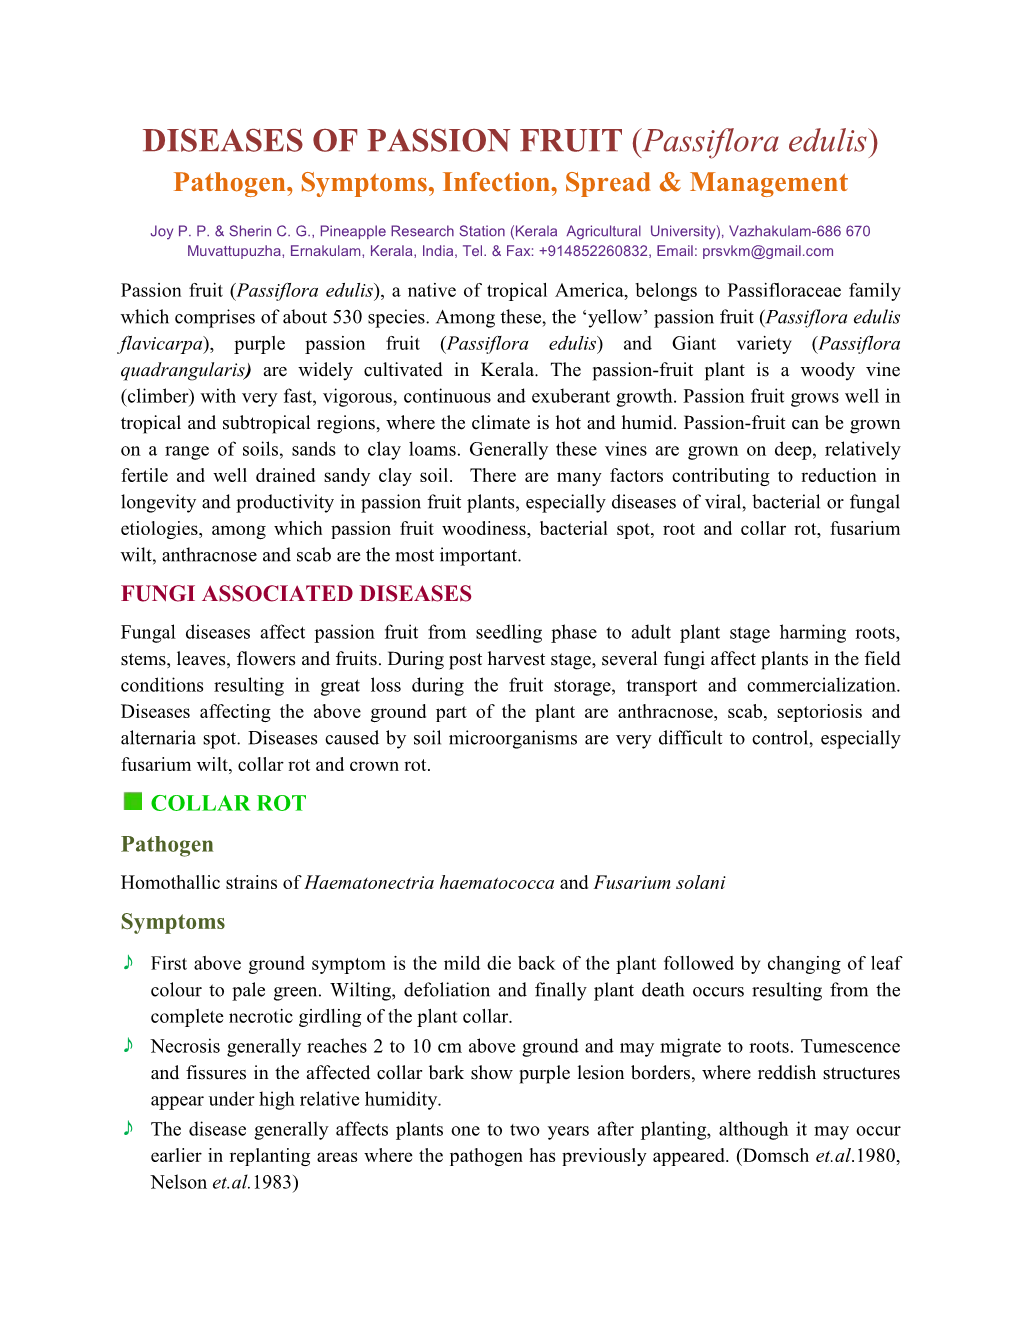 DISEASES of PASSION FRUIT (Passiflora Edulis) Pathogen, Symptoms, Infection, Spread & Management